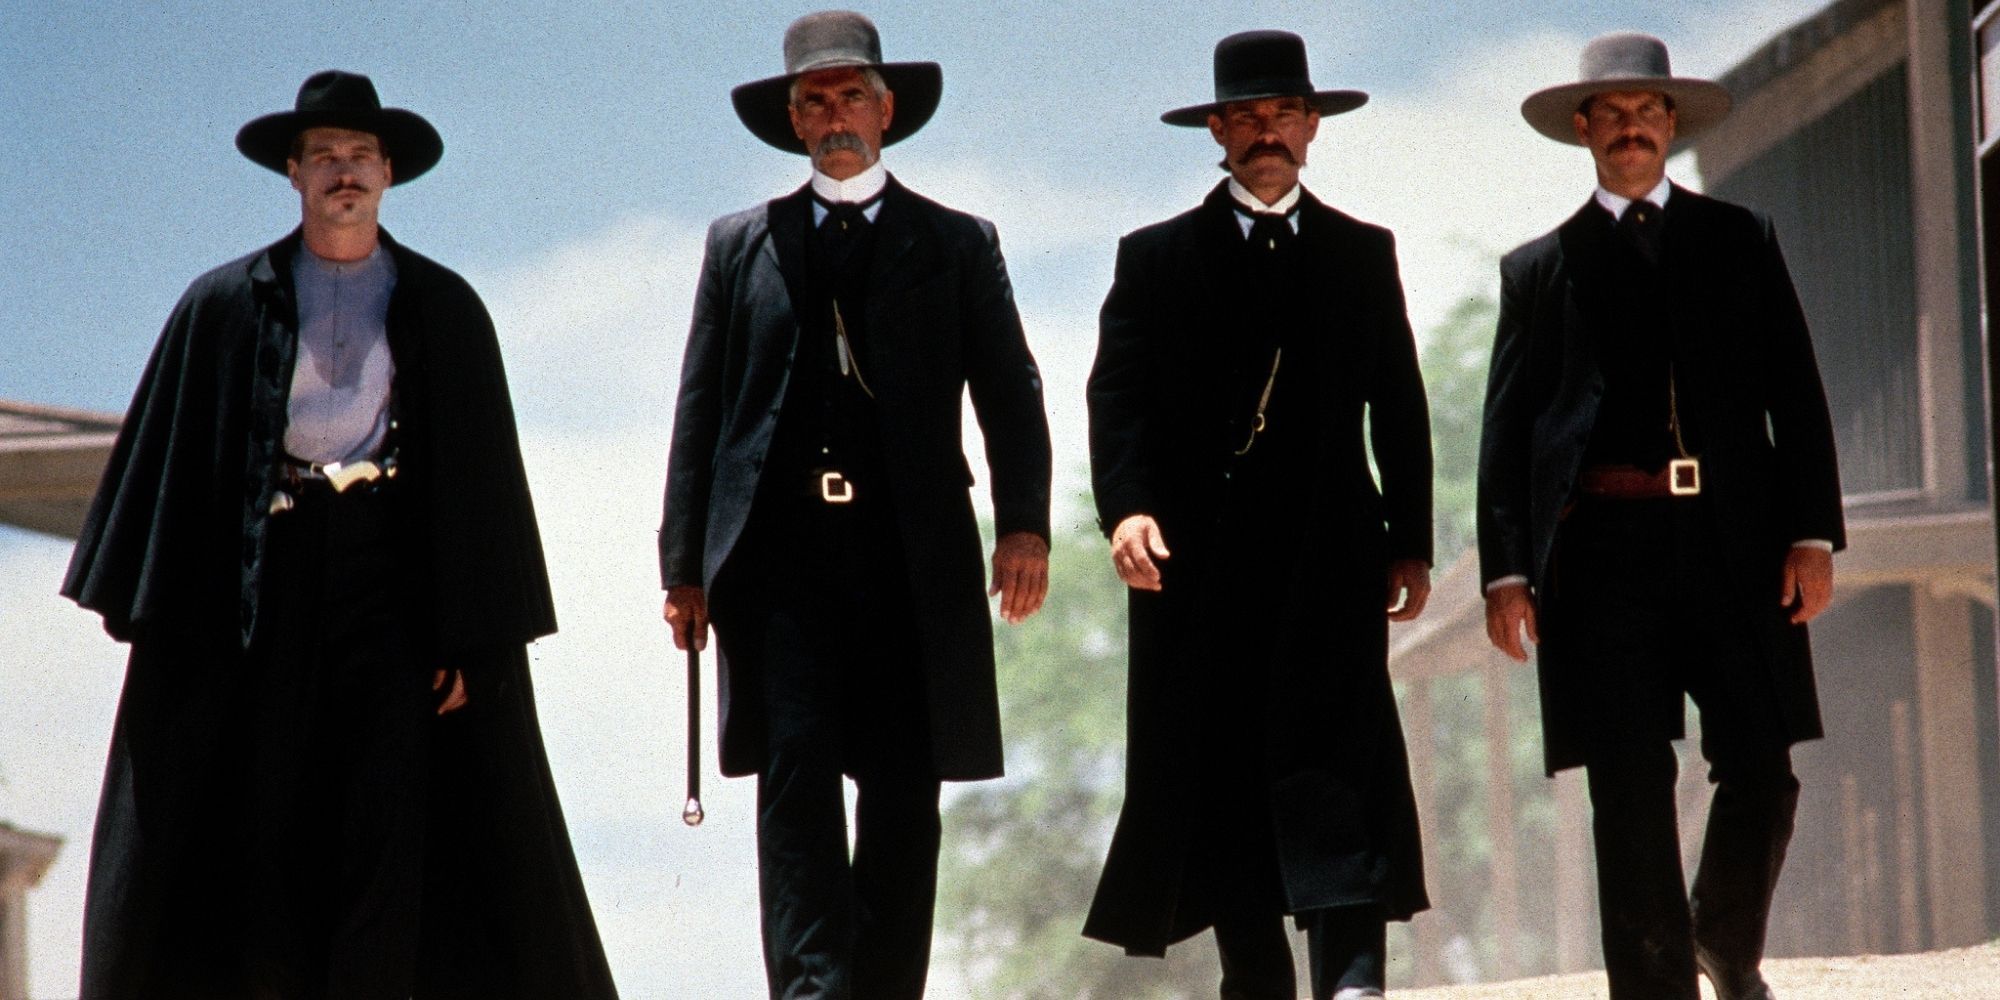 Val Kilmer as Doc Holliday, Sam Elliott as Virgil Earp, Kurt Russell as Wyatt Earp, and Bill Paxton as Morgan Earp as they walk through town in Tombstone.